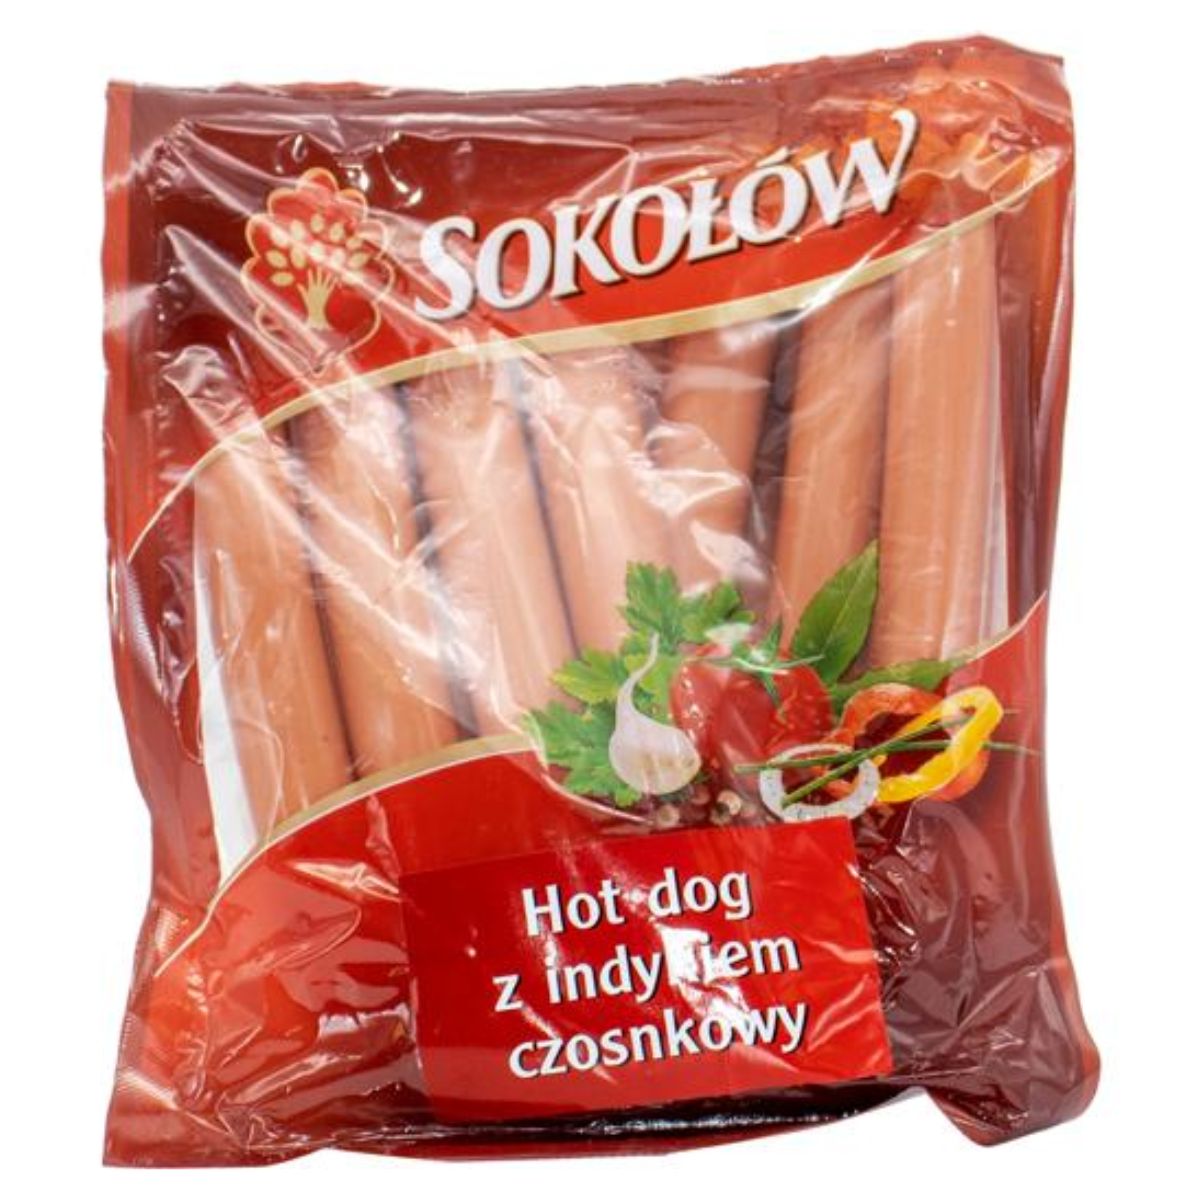 Sokolow garlic franks in a plastic bag.